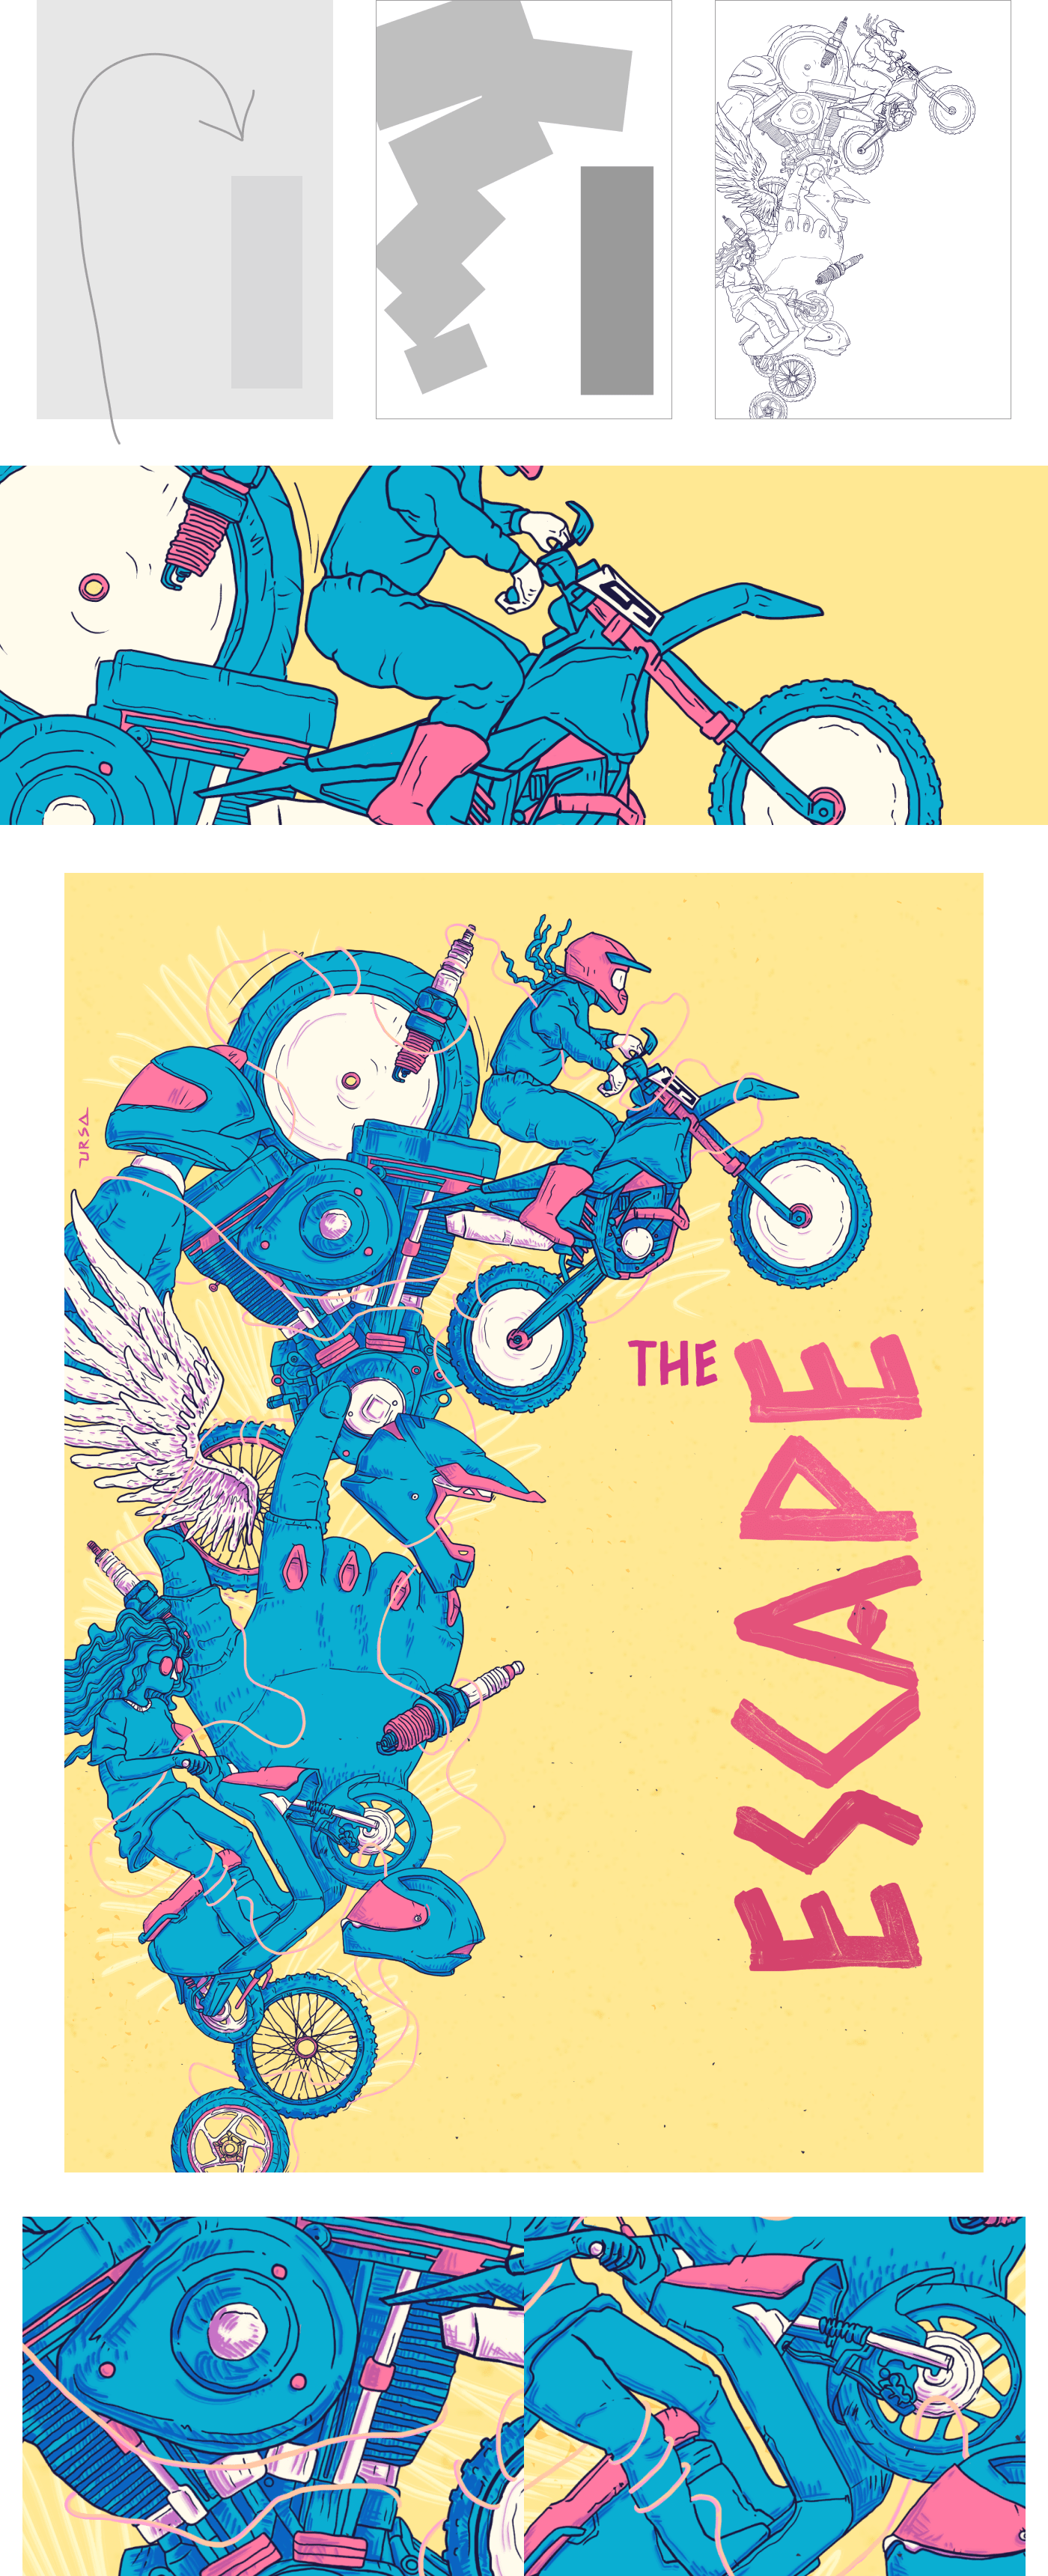 adrenaline Adventure Time Dangerous escape jumping Motocross motogirl motorcycle psychedelic art posterdesign